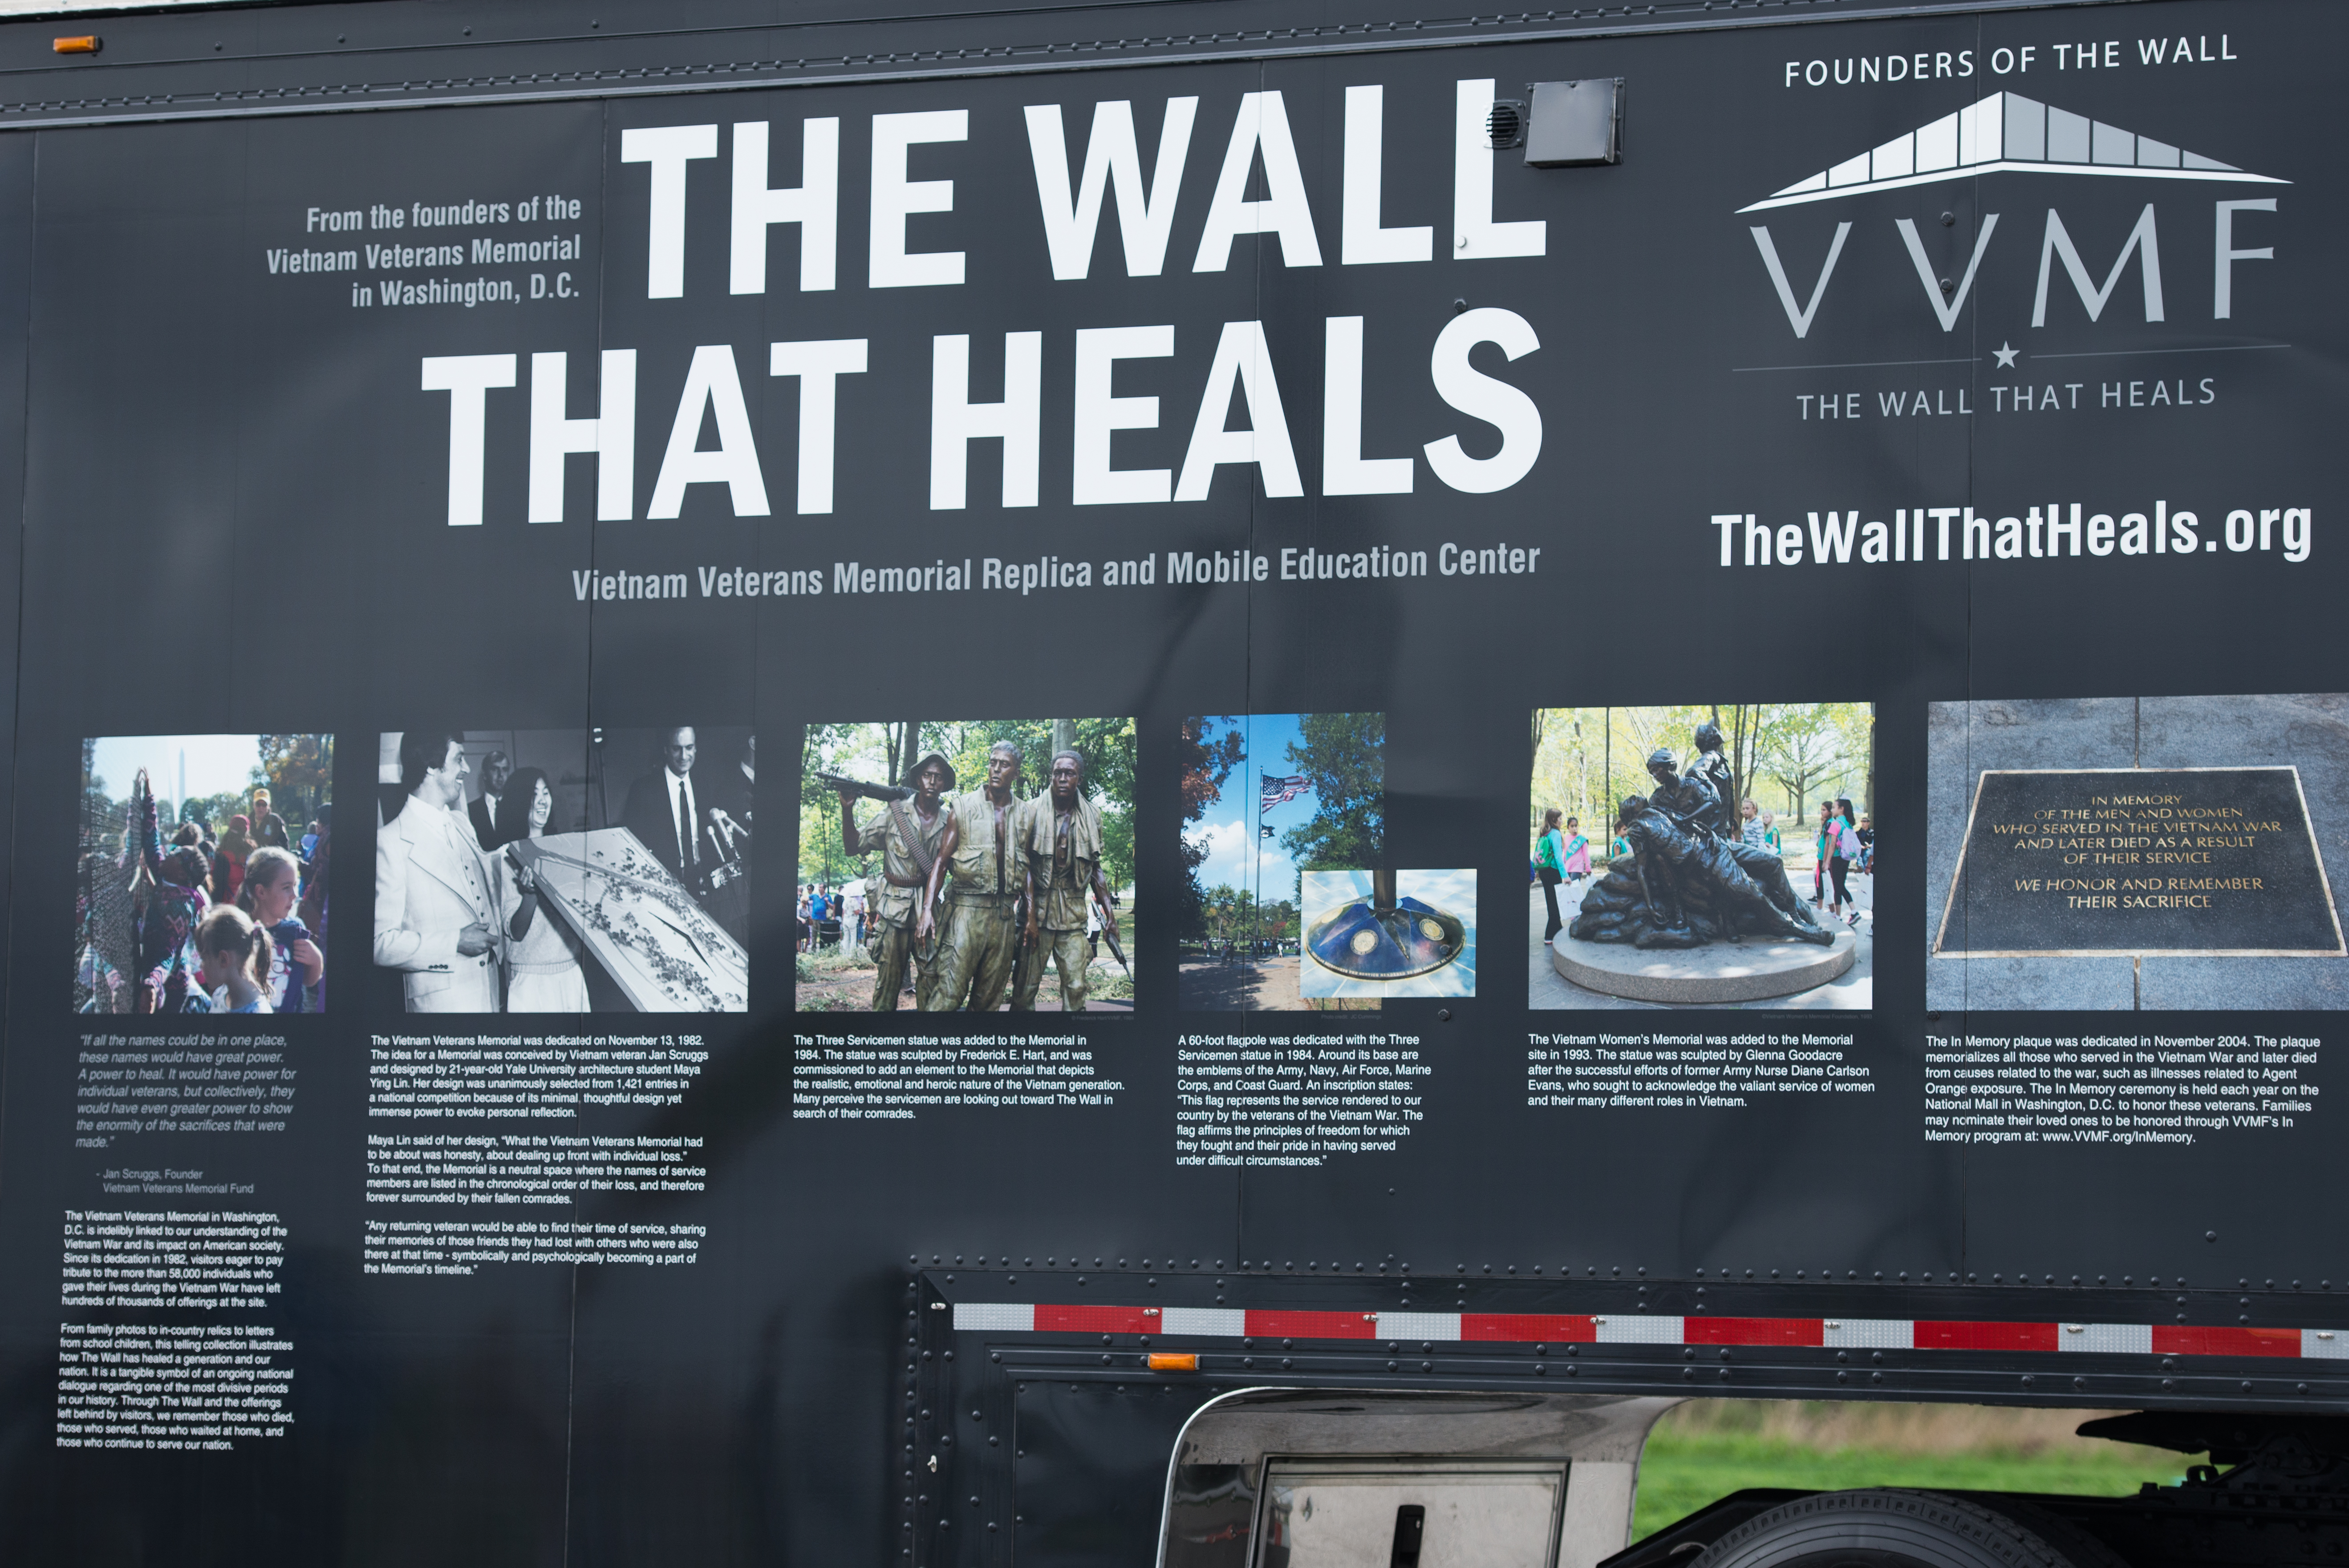 Fabricator Spotlight:  Creatacor – Fabricating the Vietnam Veterans Memorial Wall with Avonite® Solid Surface